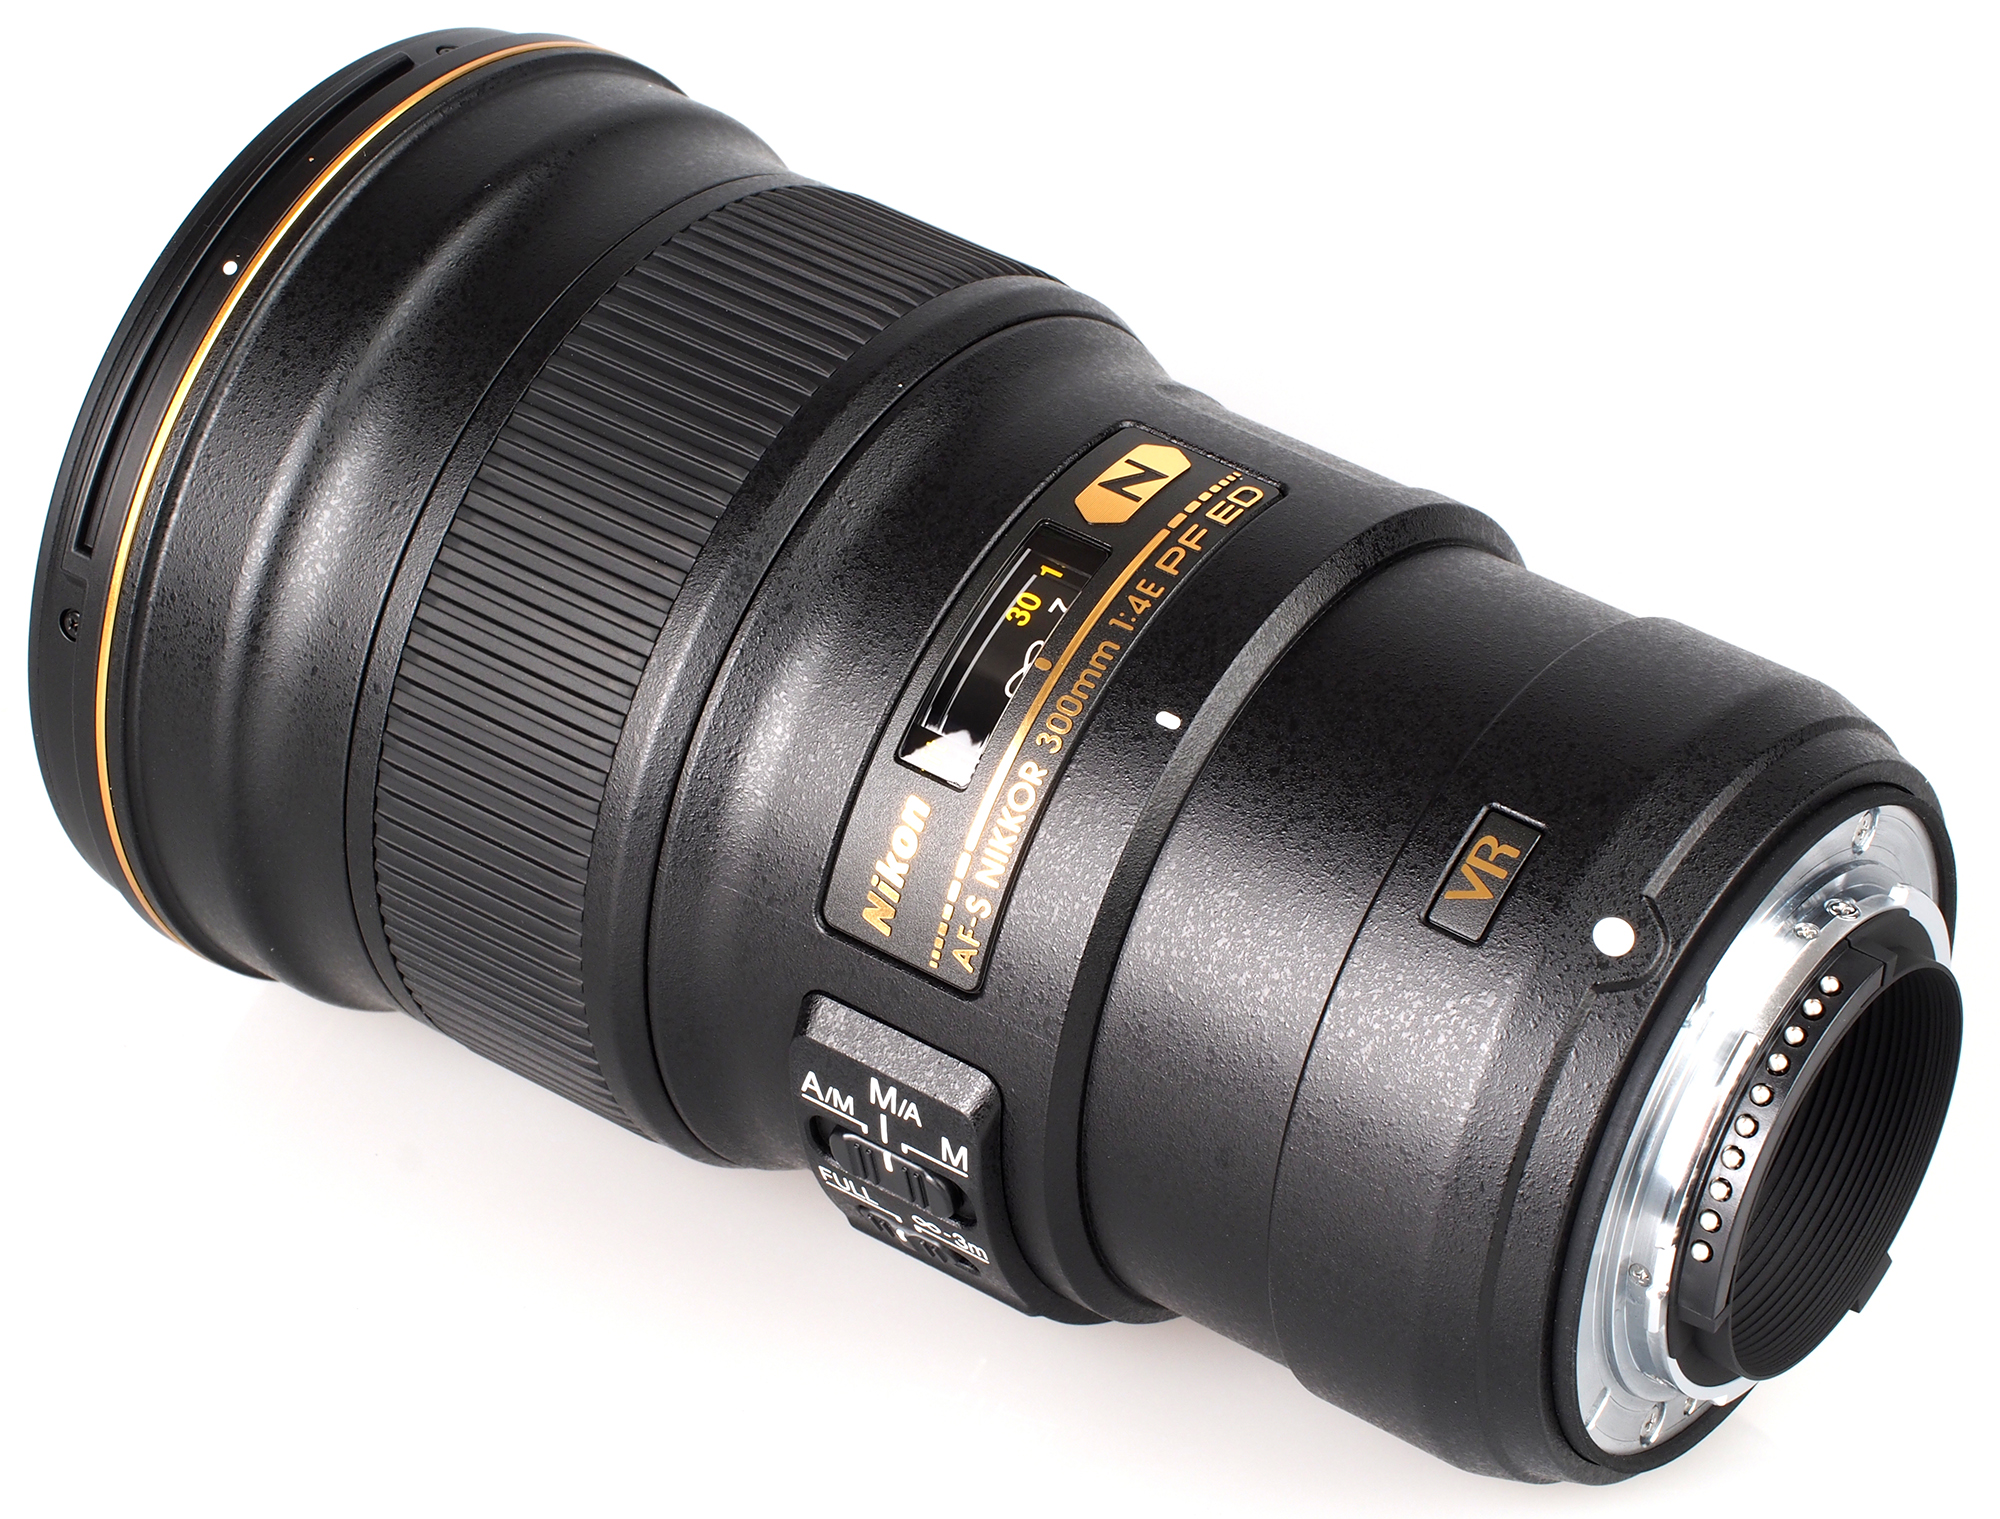 AF-S NIKKOR 300mm f/4E PF ED VR Lens Review and Sample Images by 